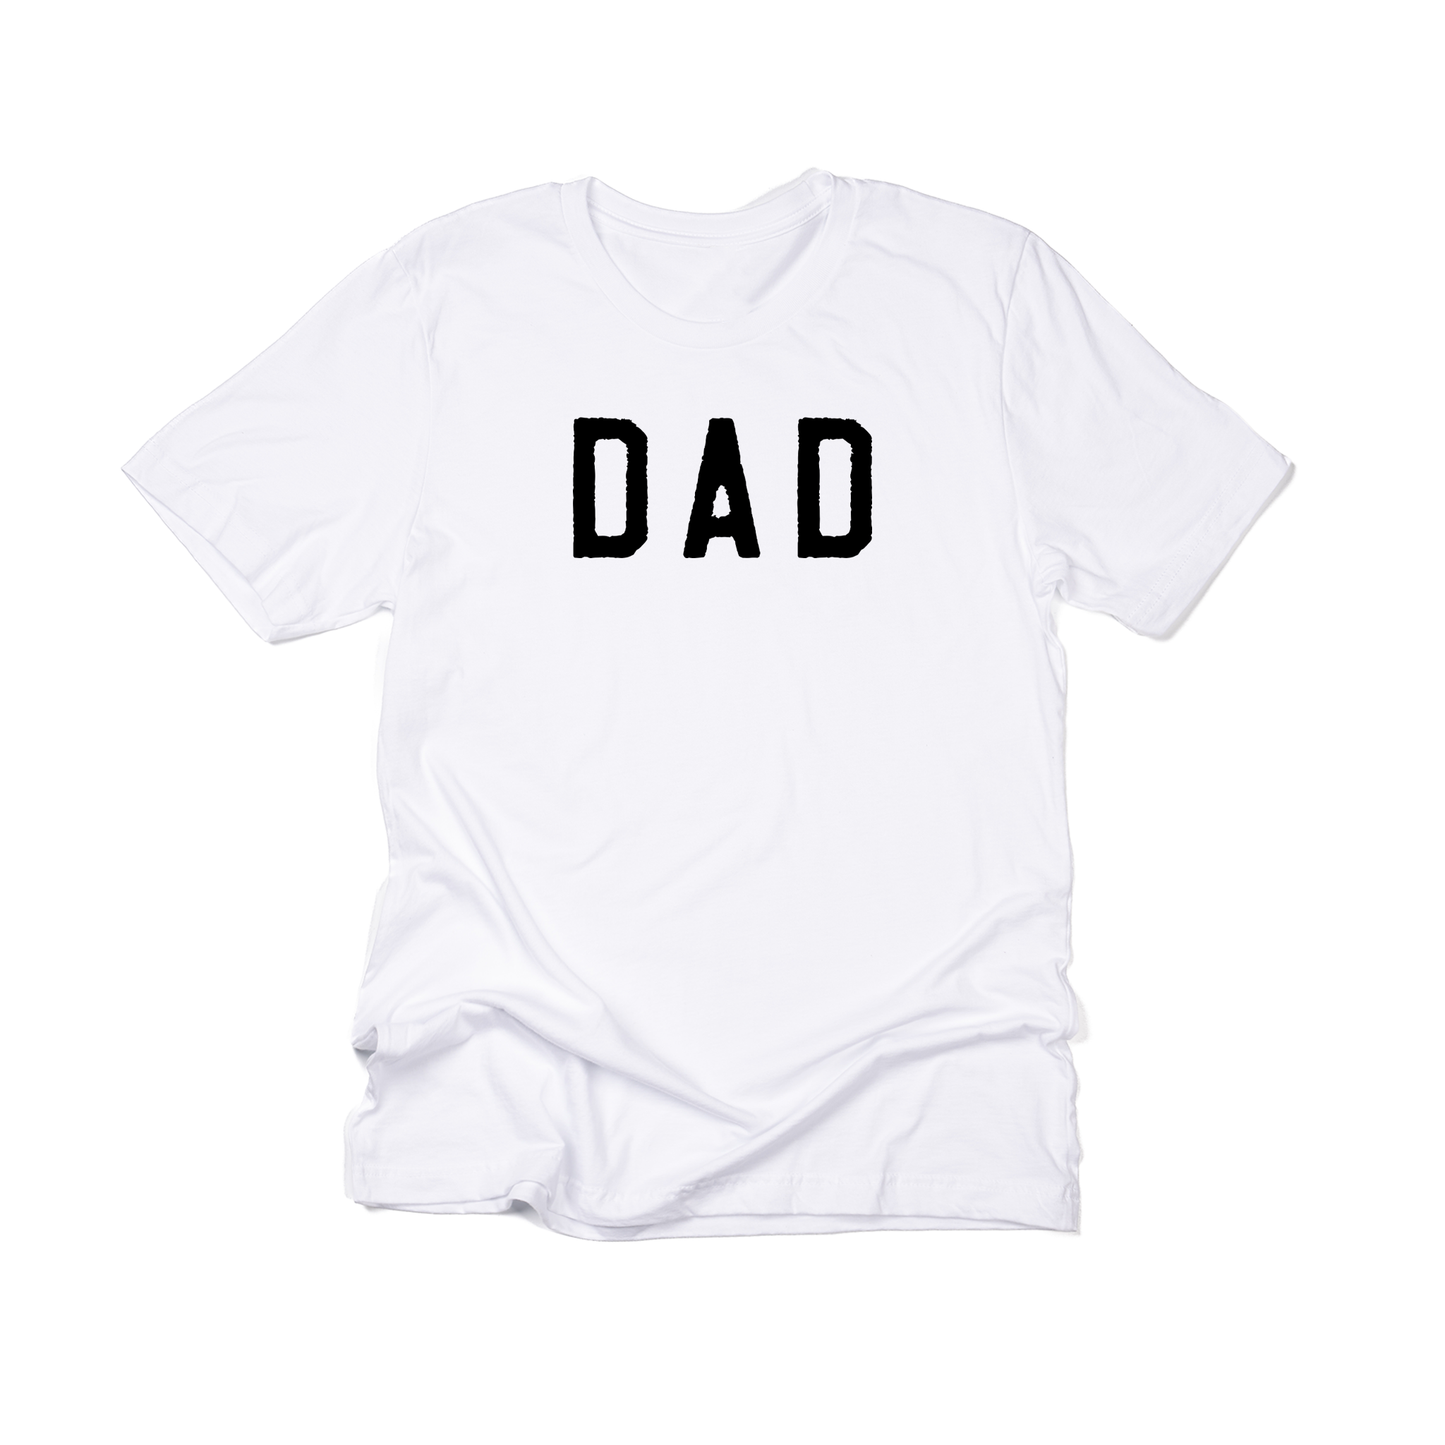 Dad (Rough, Black) - Tee (White)